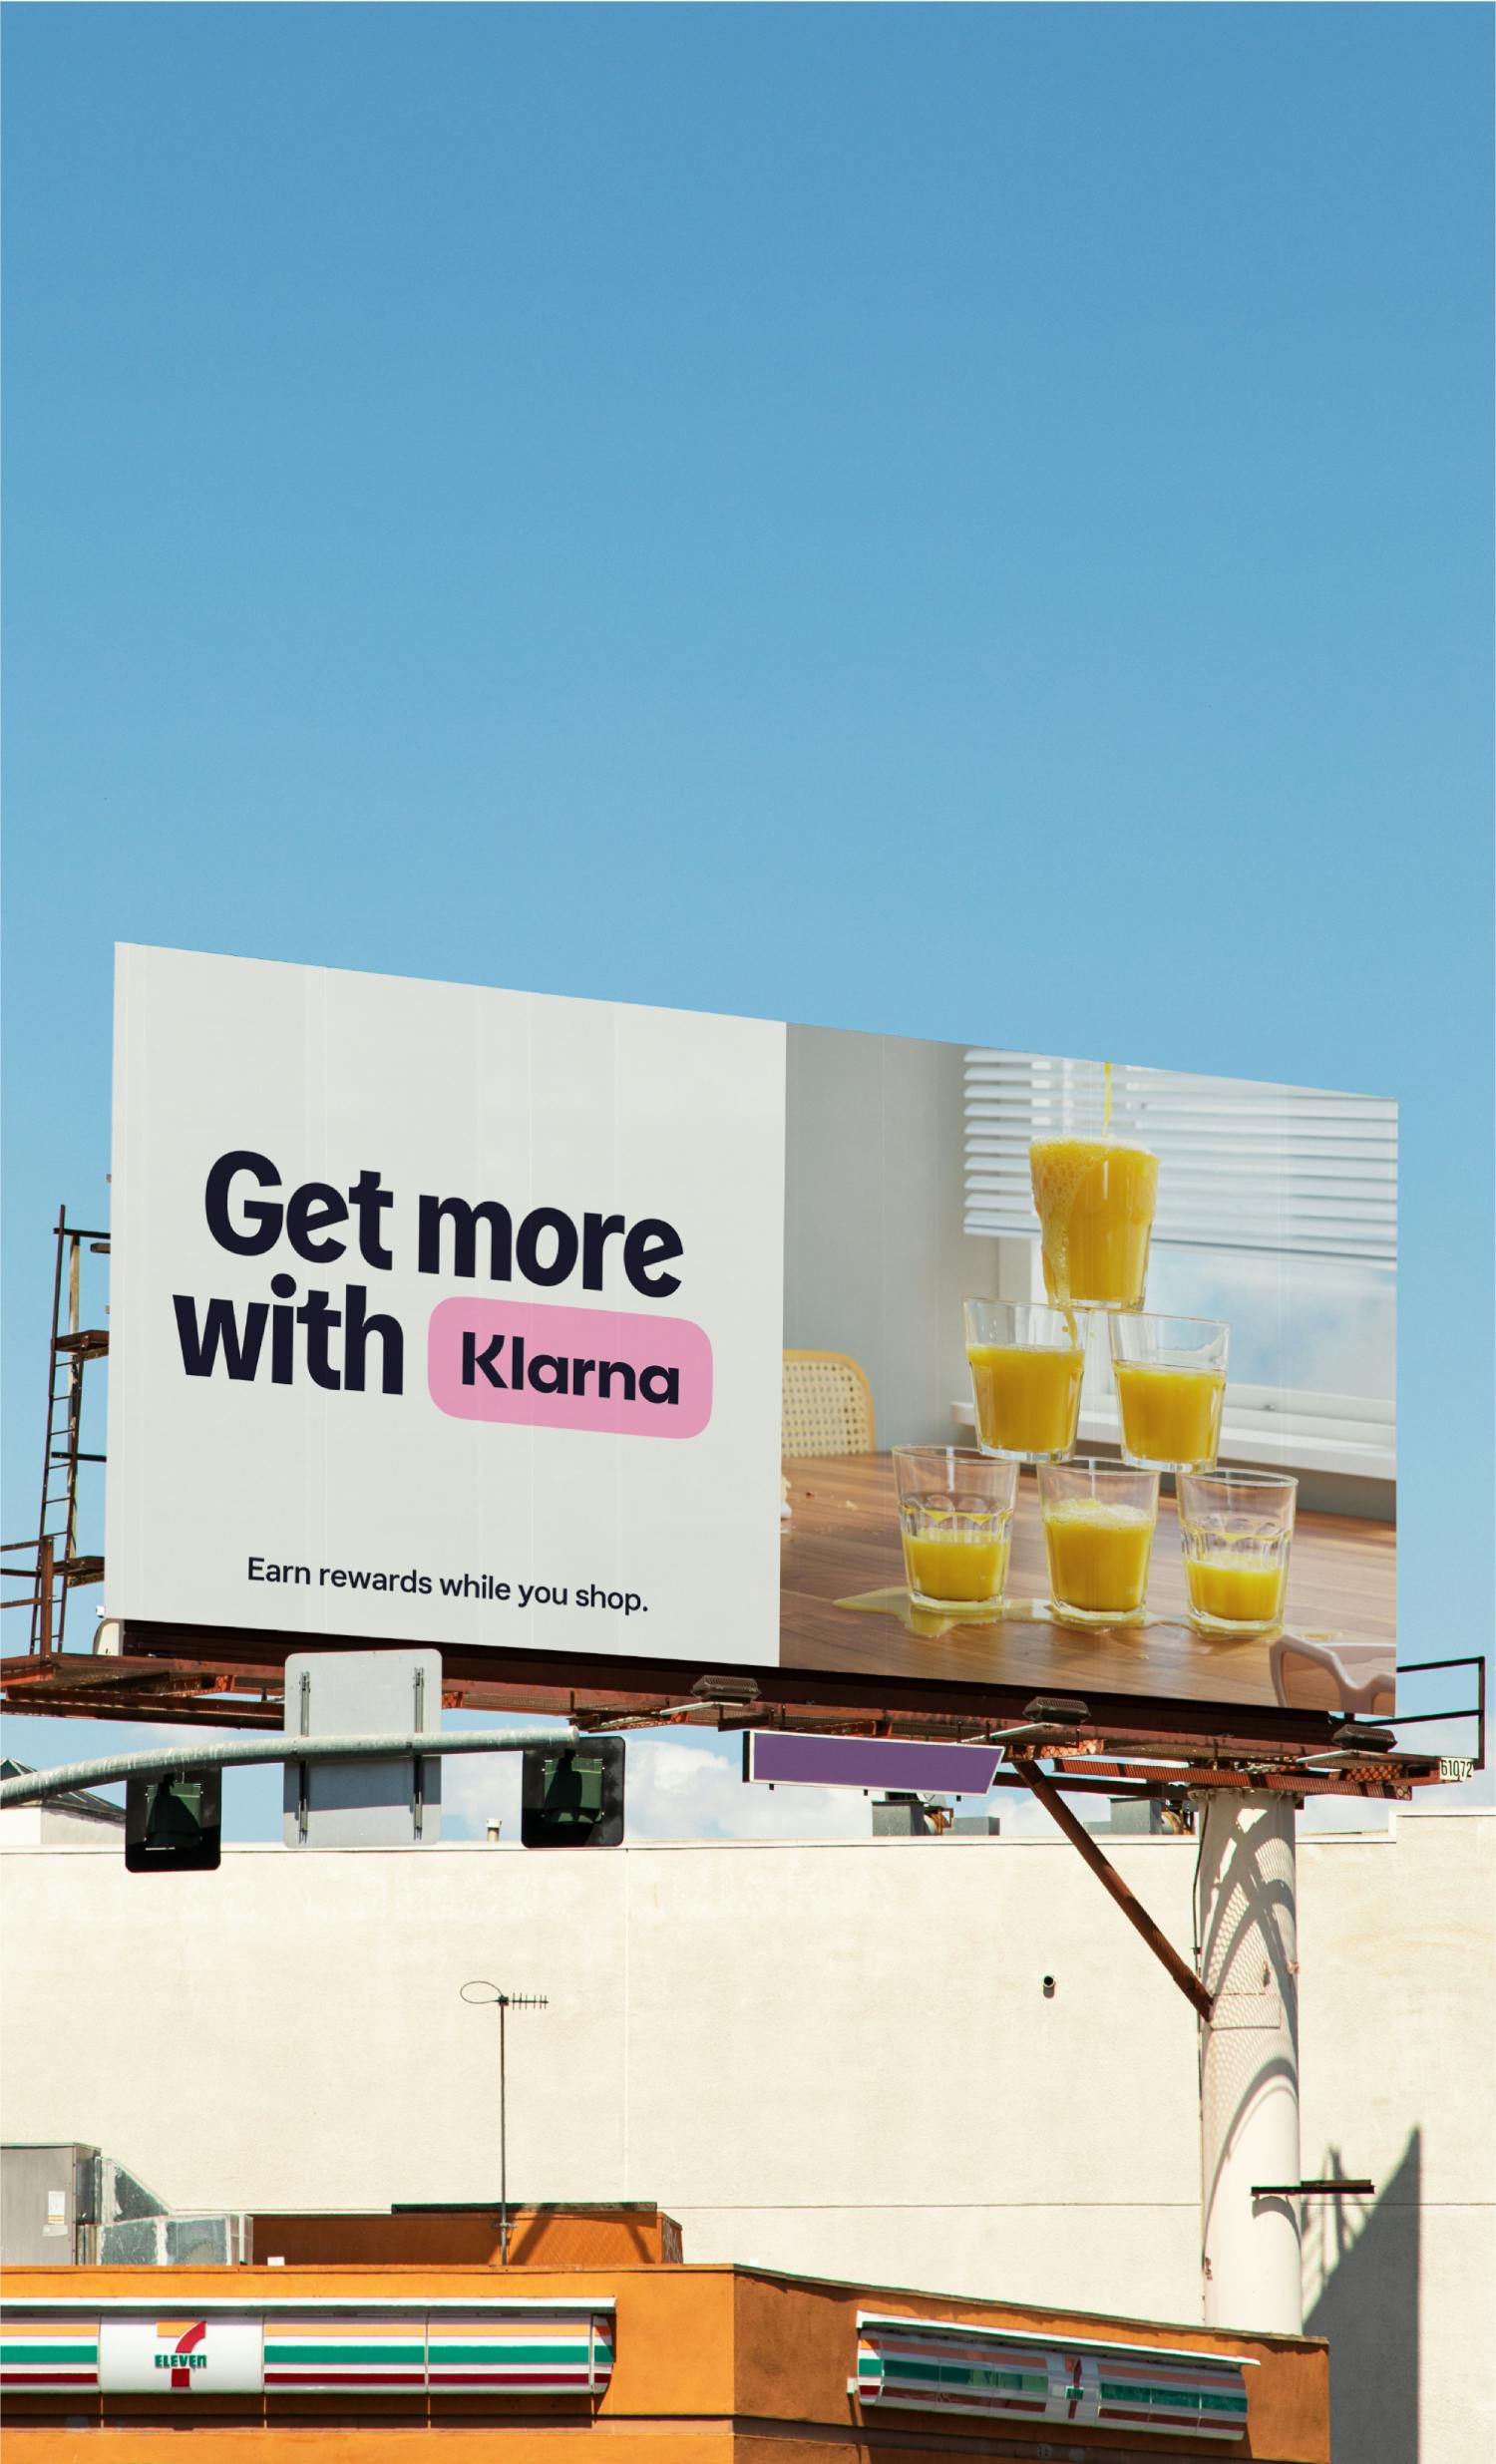 Billboard saying 'Get more with Klarna'